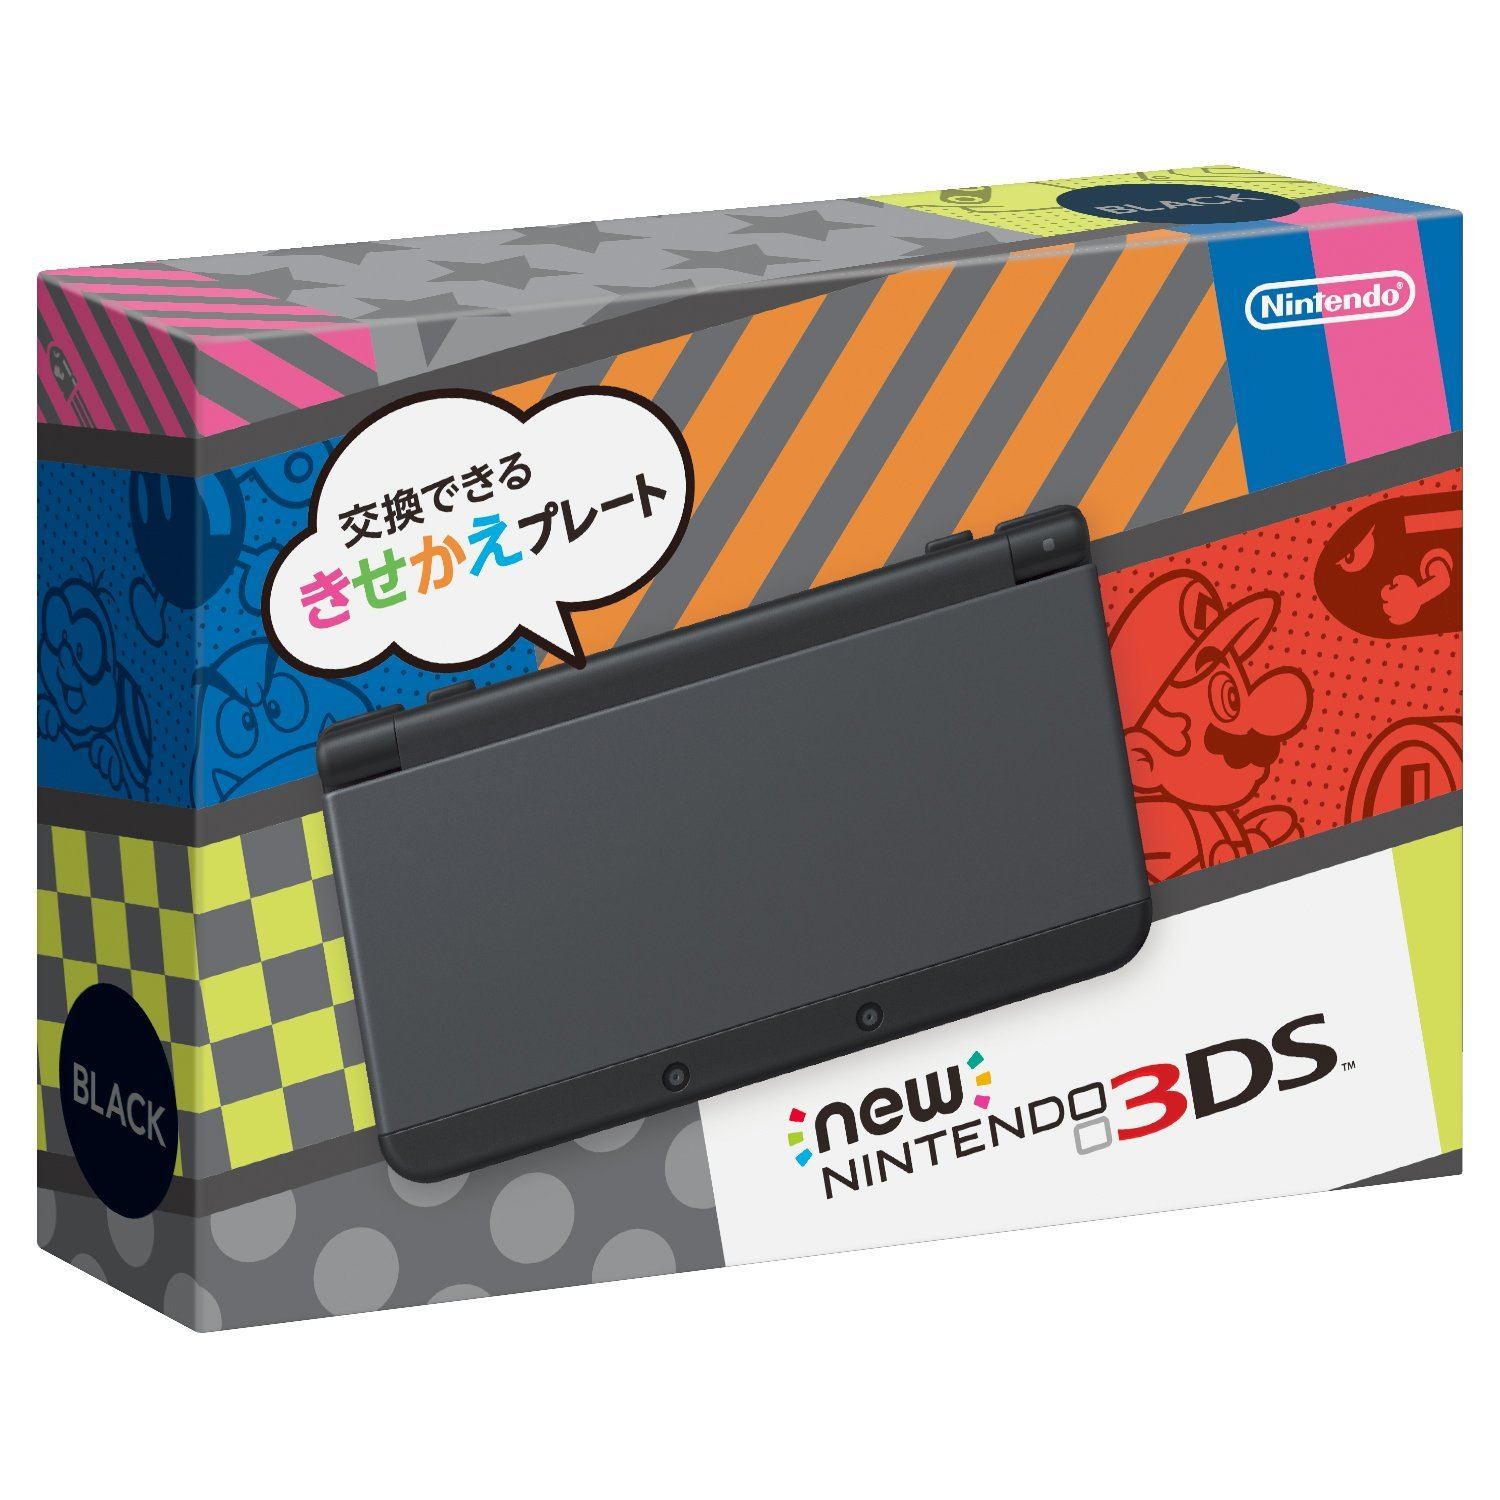 New Nintendo 3DS (Black)